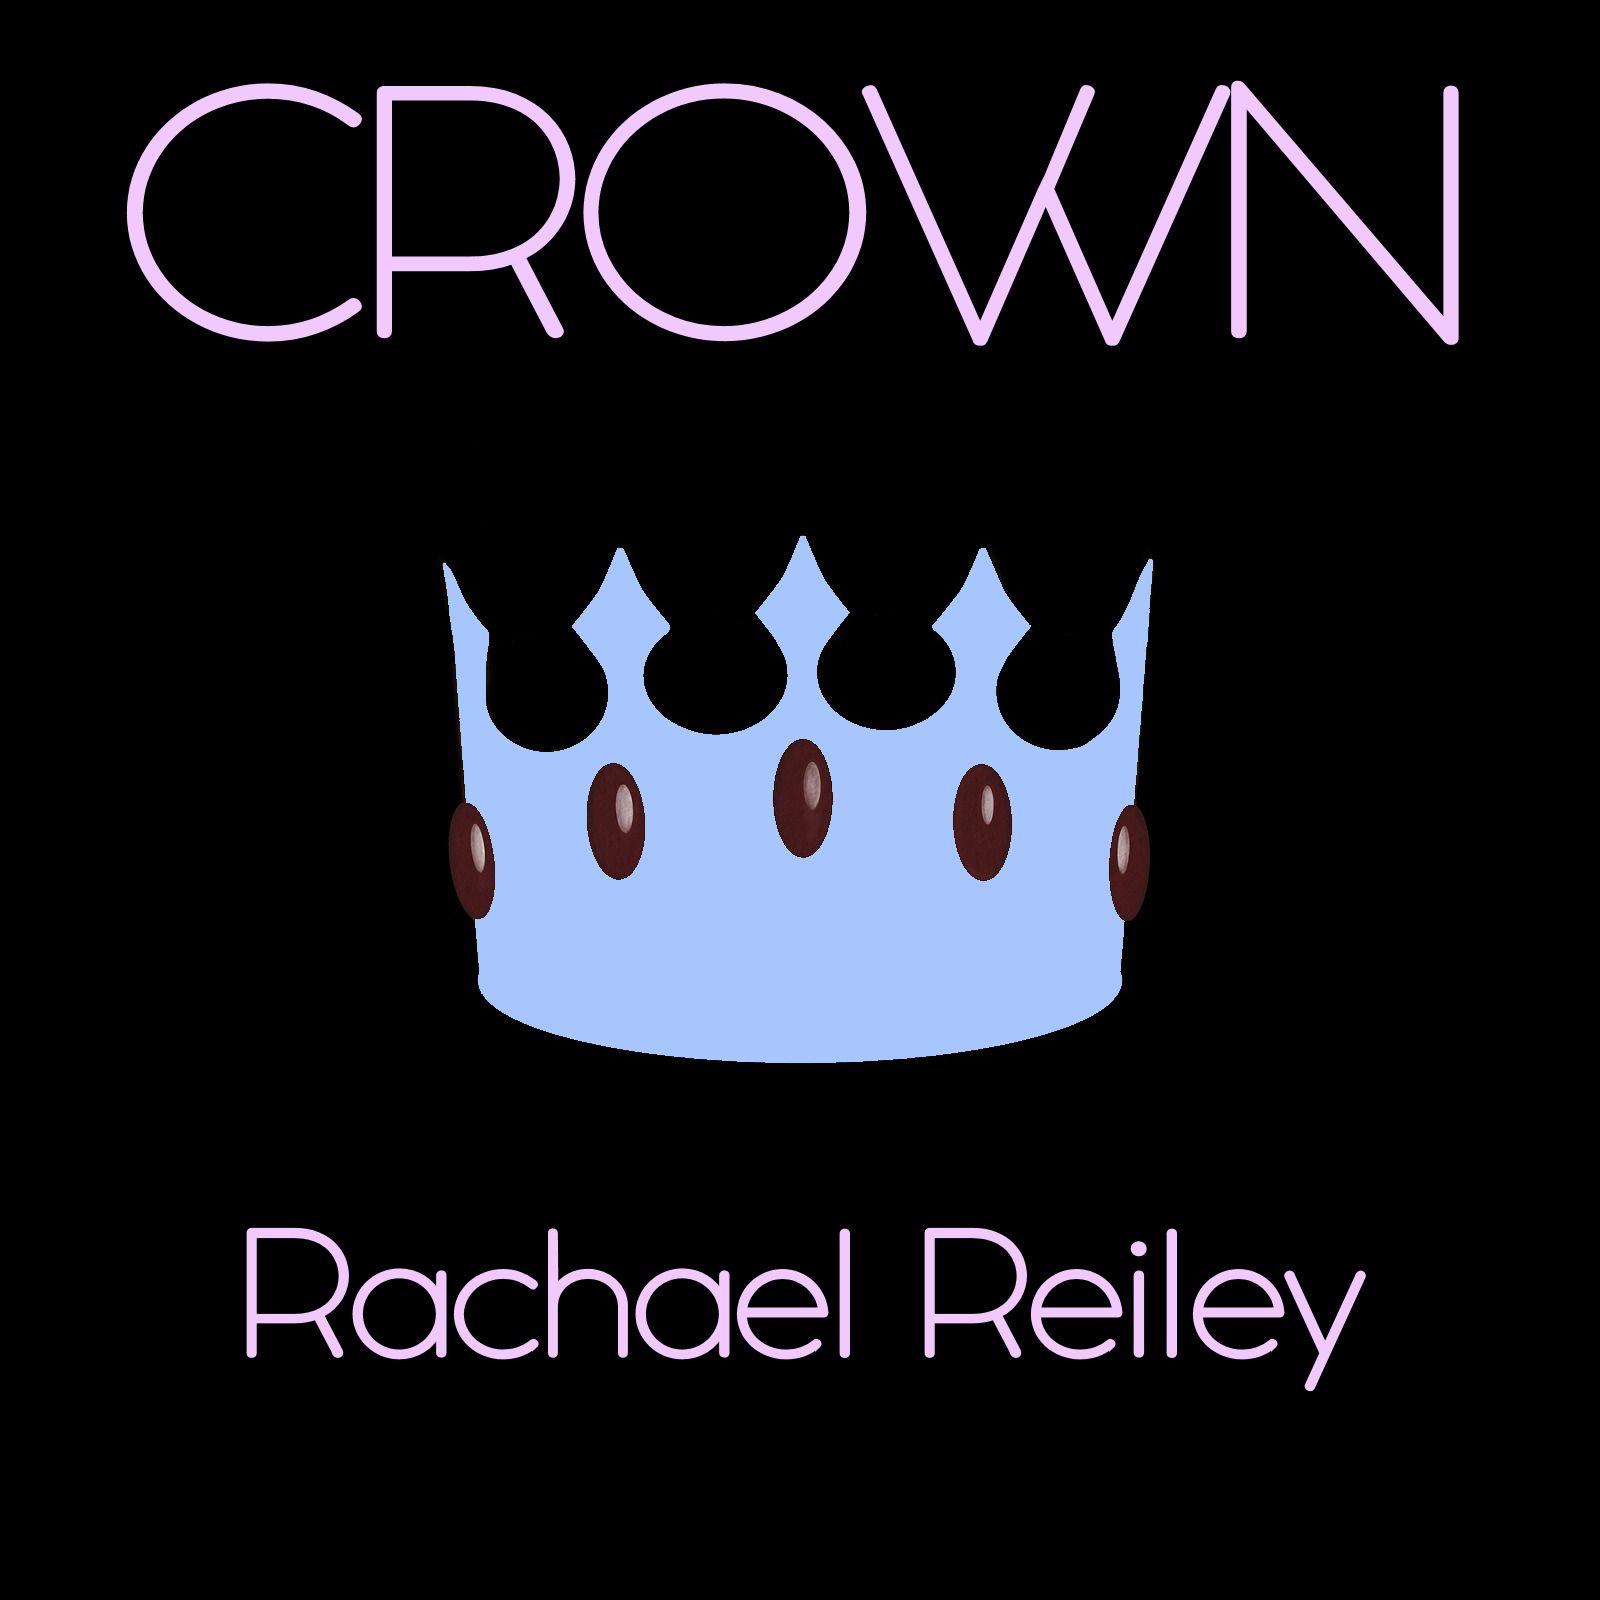  Rachael Reiley – “Crown”